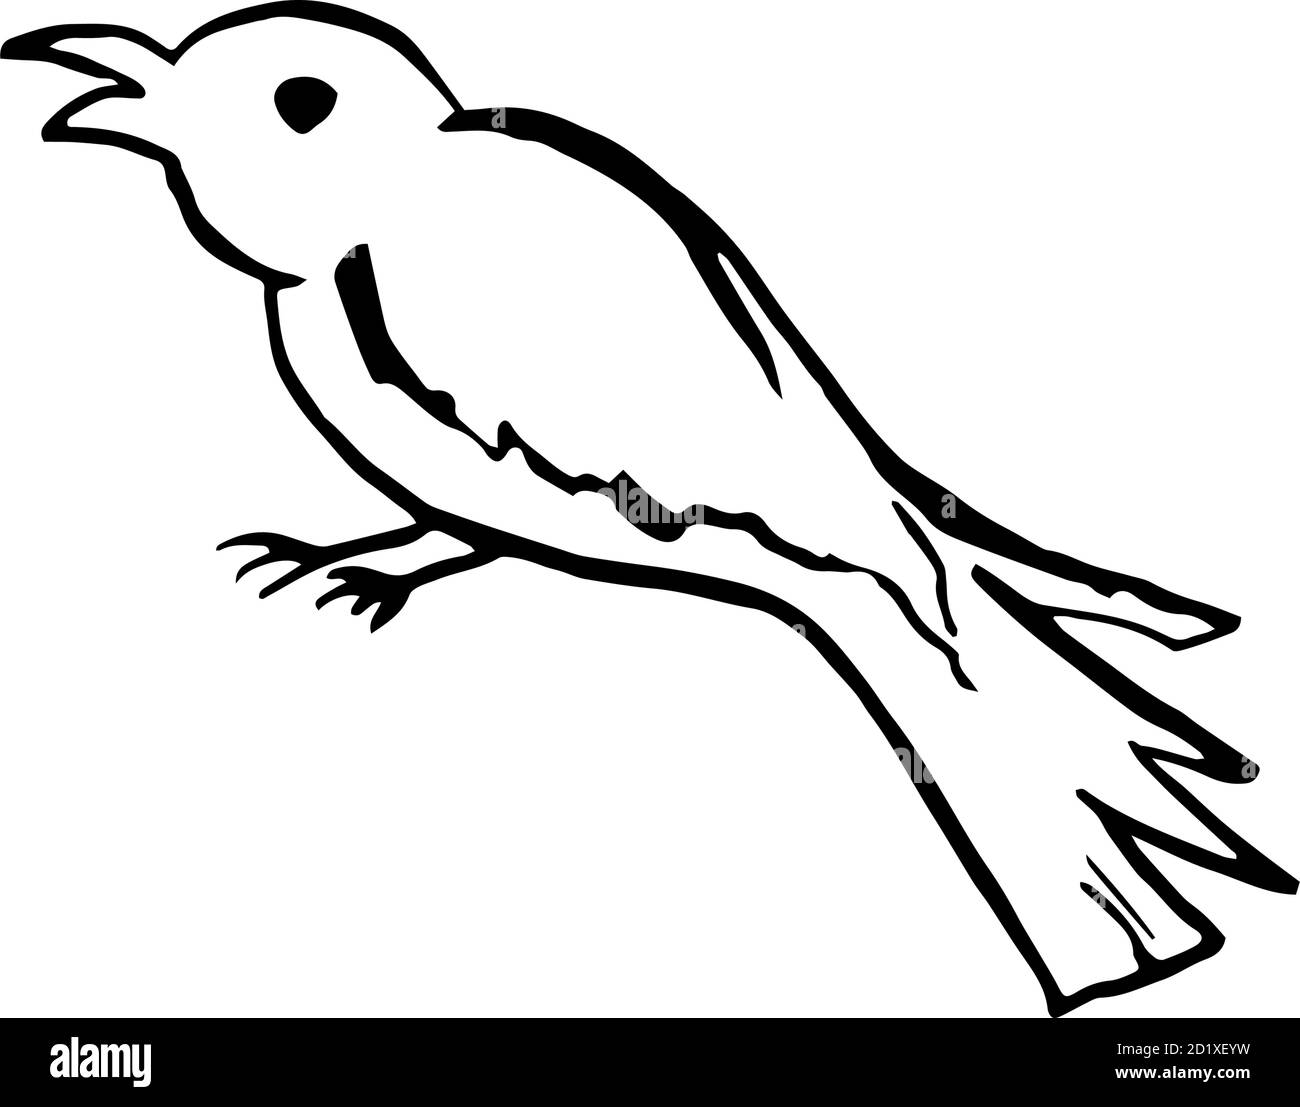 Halloween doodle crow or magpie bird element. Isolated vector ...